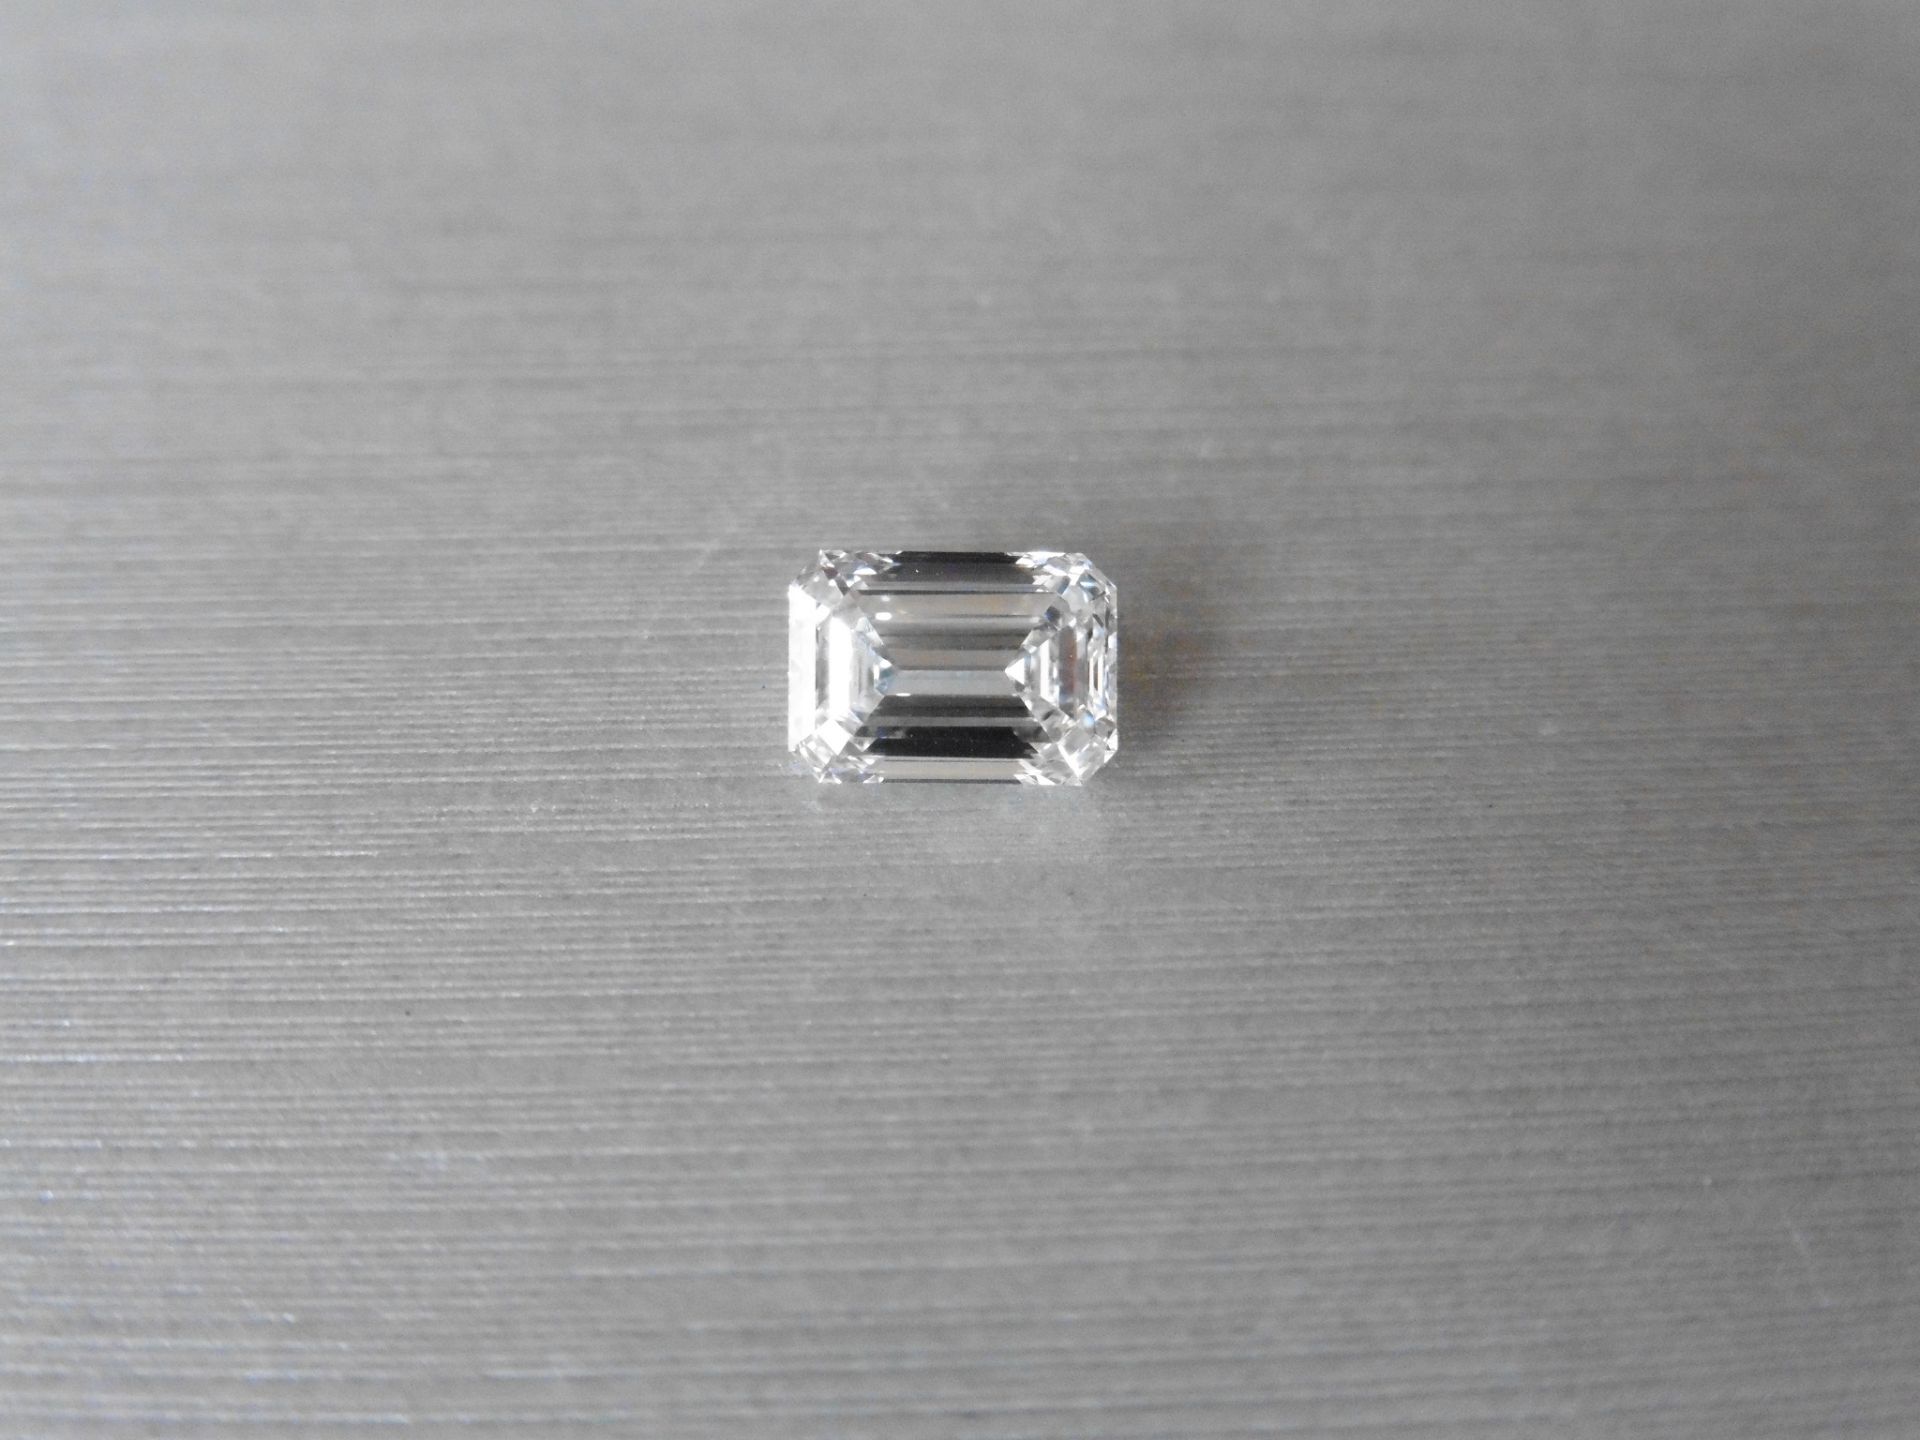 2.00ct single emerald cut diamond. Measures 8.46 x 6.01 x 3.94mm. E colour VS1 clarity. Valued at £